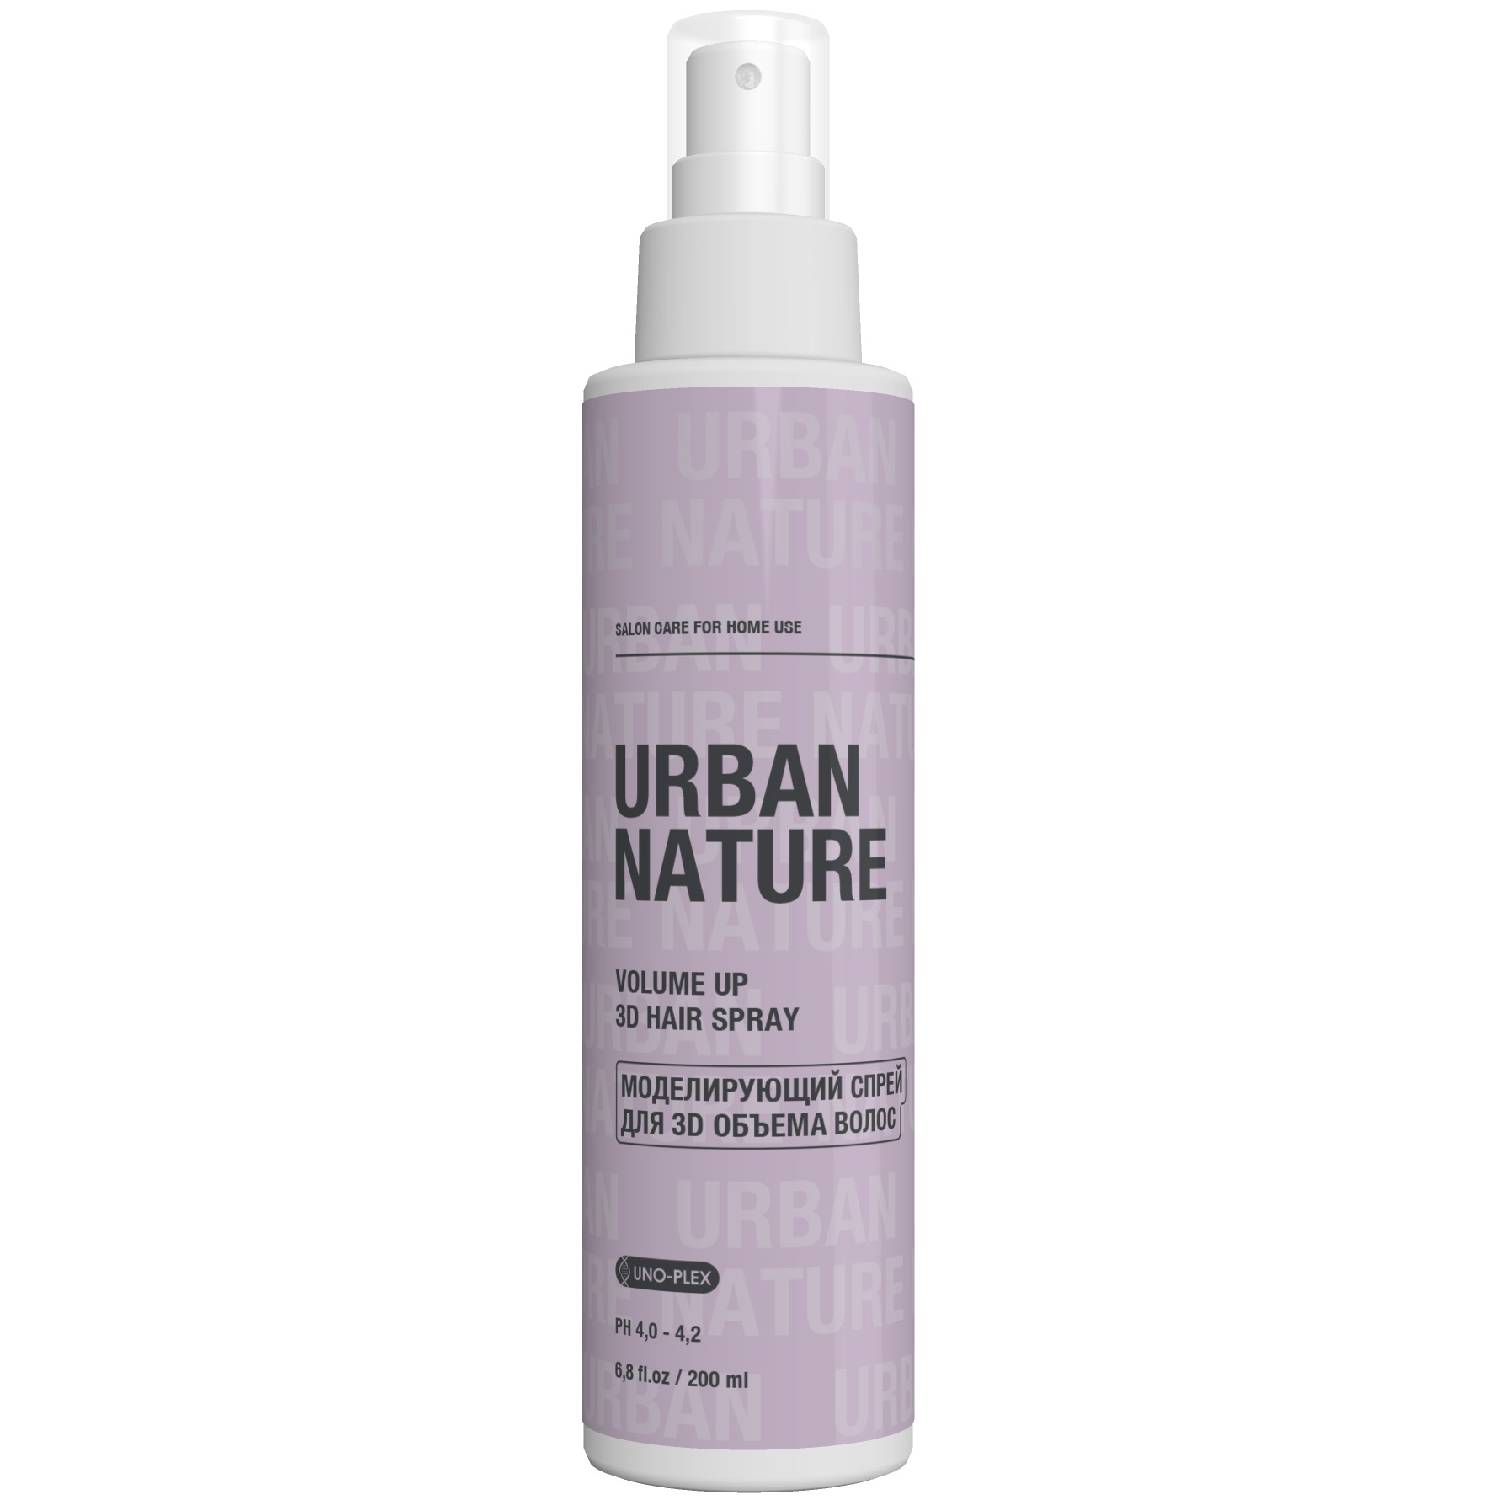 Urban Nature Моделирующий спрей для 3D объема волос, 200 мл (Urban Nature, Volume Up)